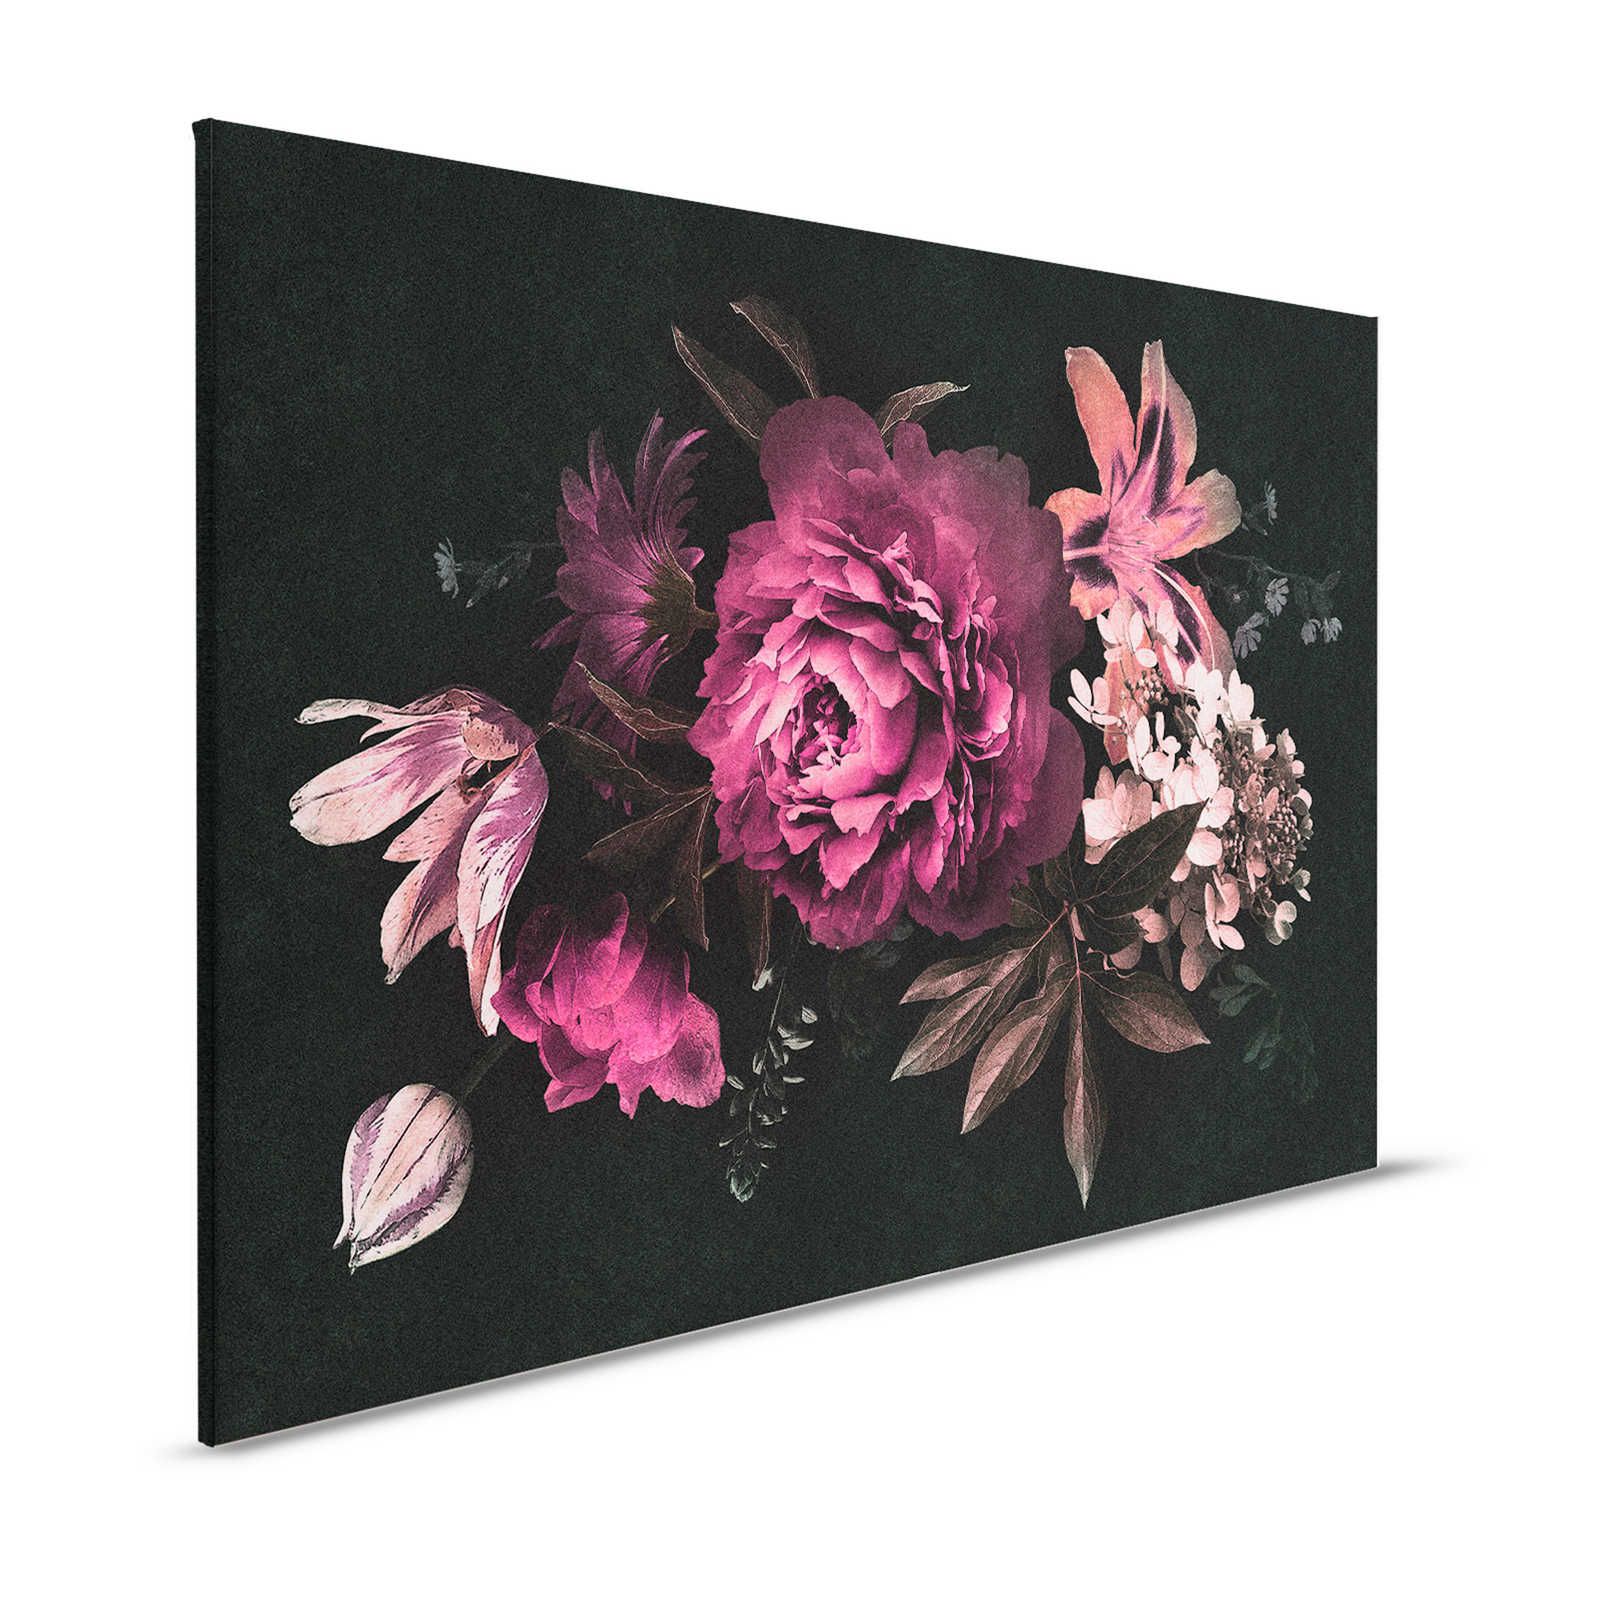 Drama queen 3 - Canvas painting romantic bouquet - 1,20 m x 0,80 m
